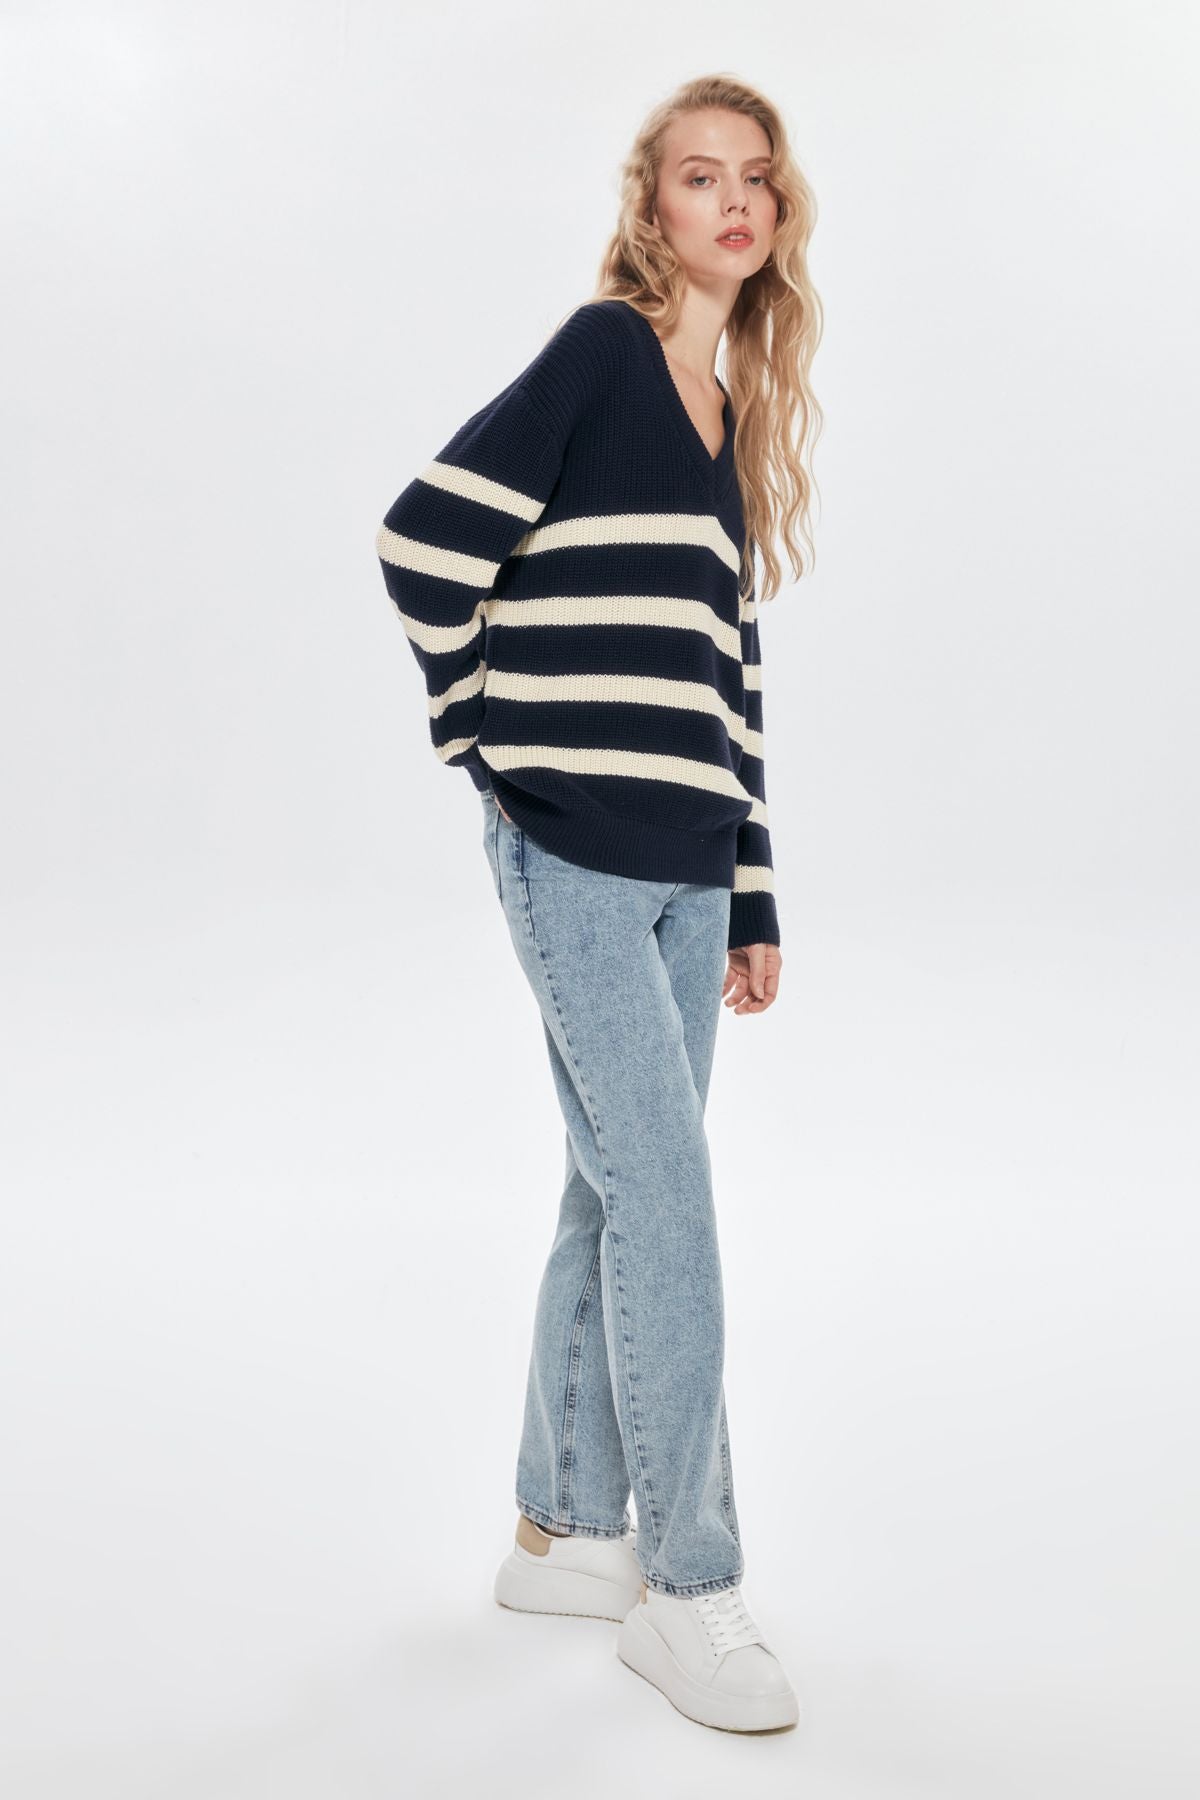 V-Neck Striped Knitwear Sweater Navy Blue-Ecru